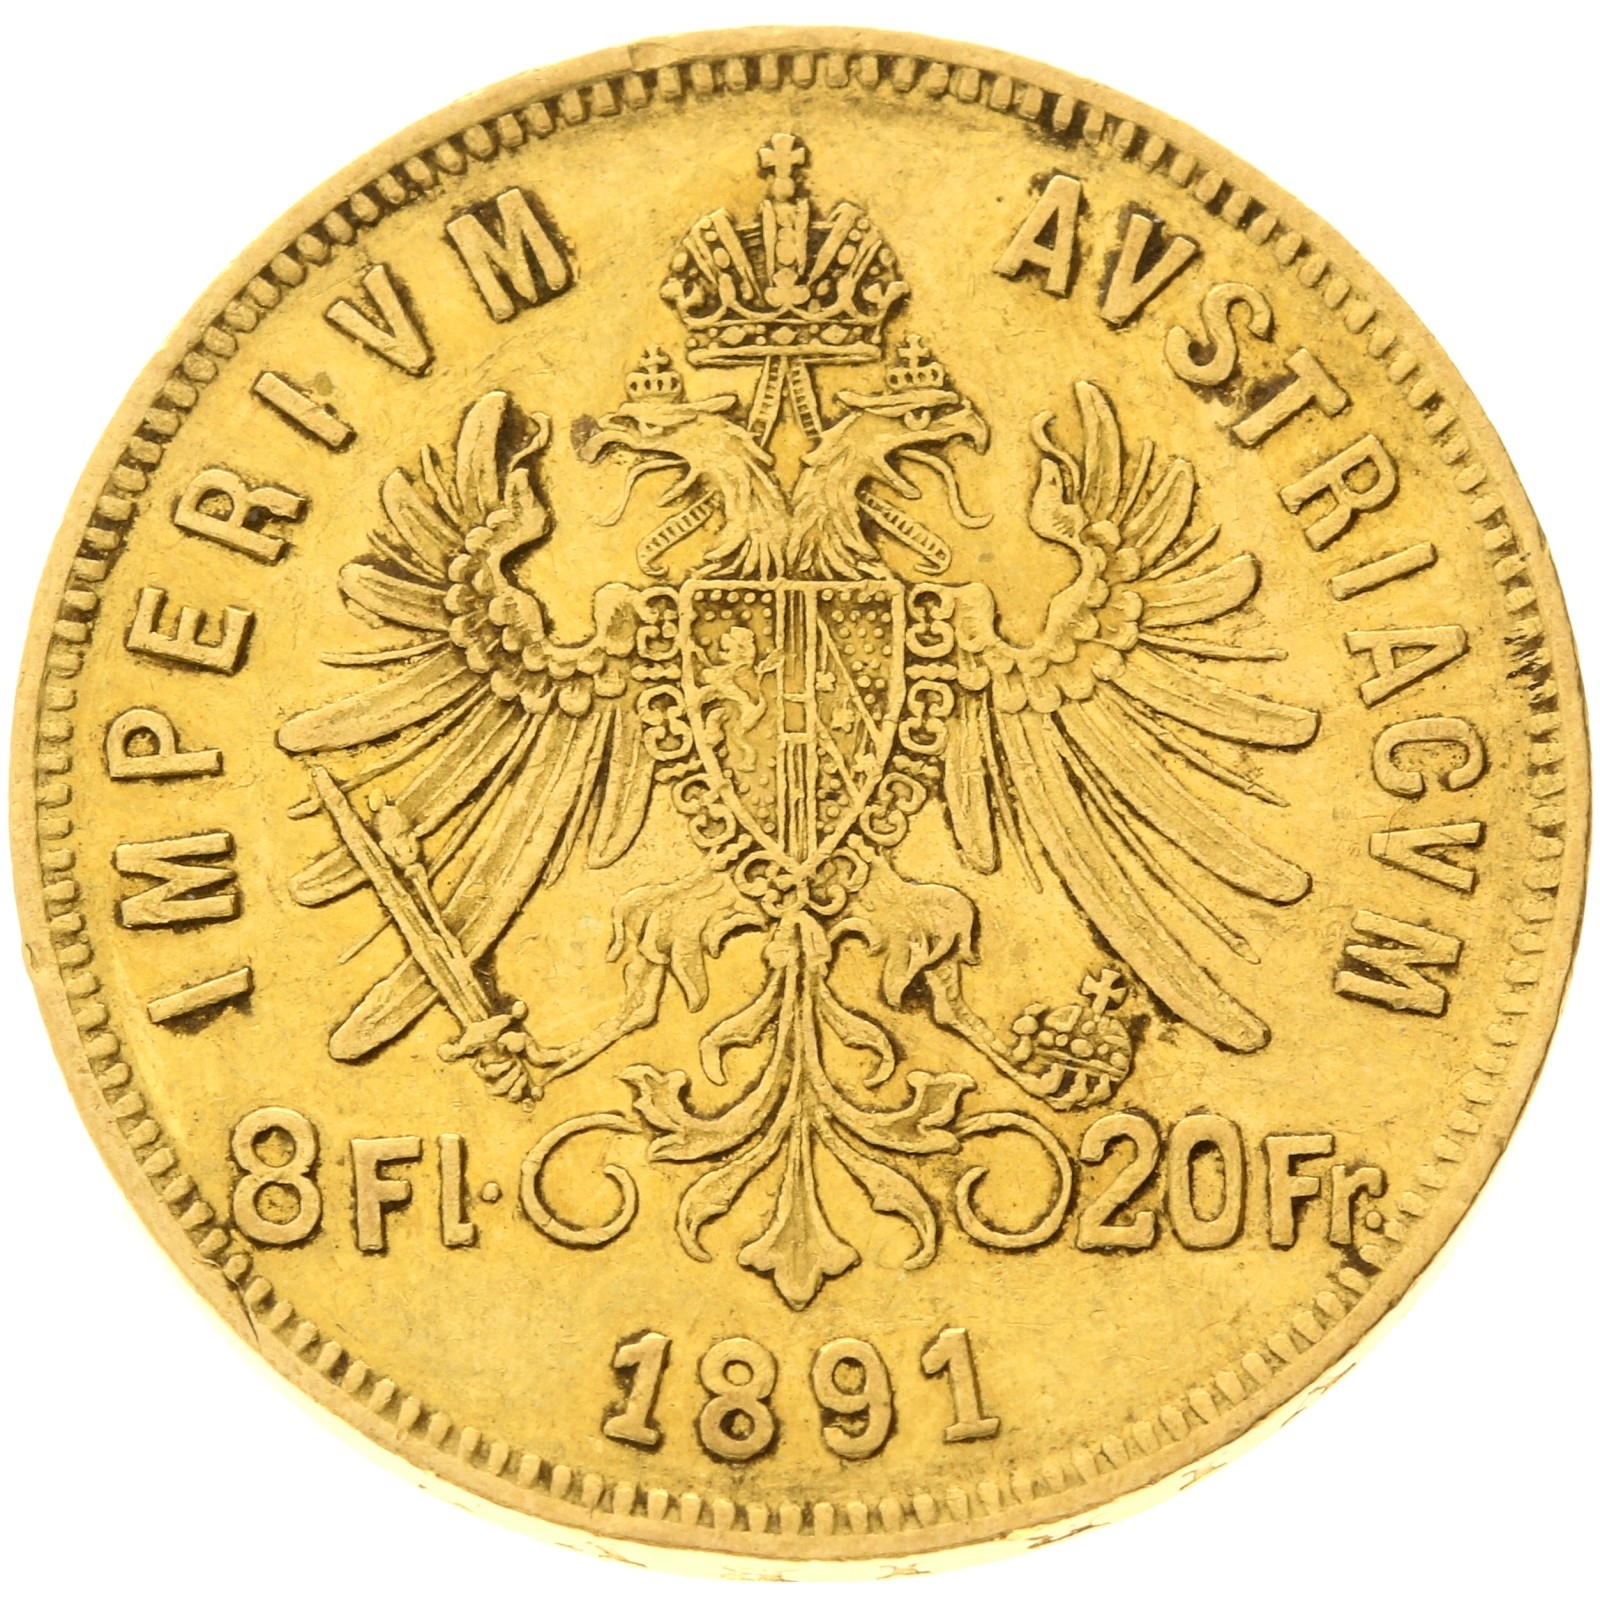 Austria - 8 Florins / 20 Francs - 1891 - Franz Joseph I